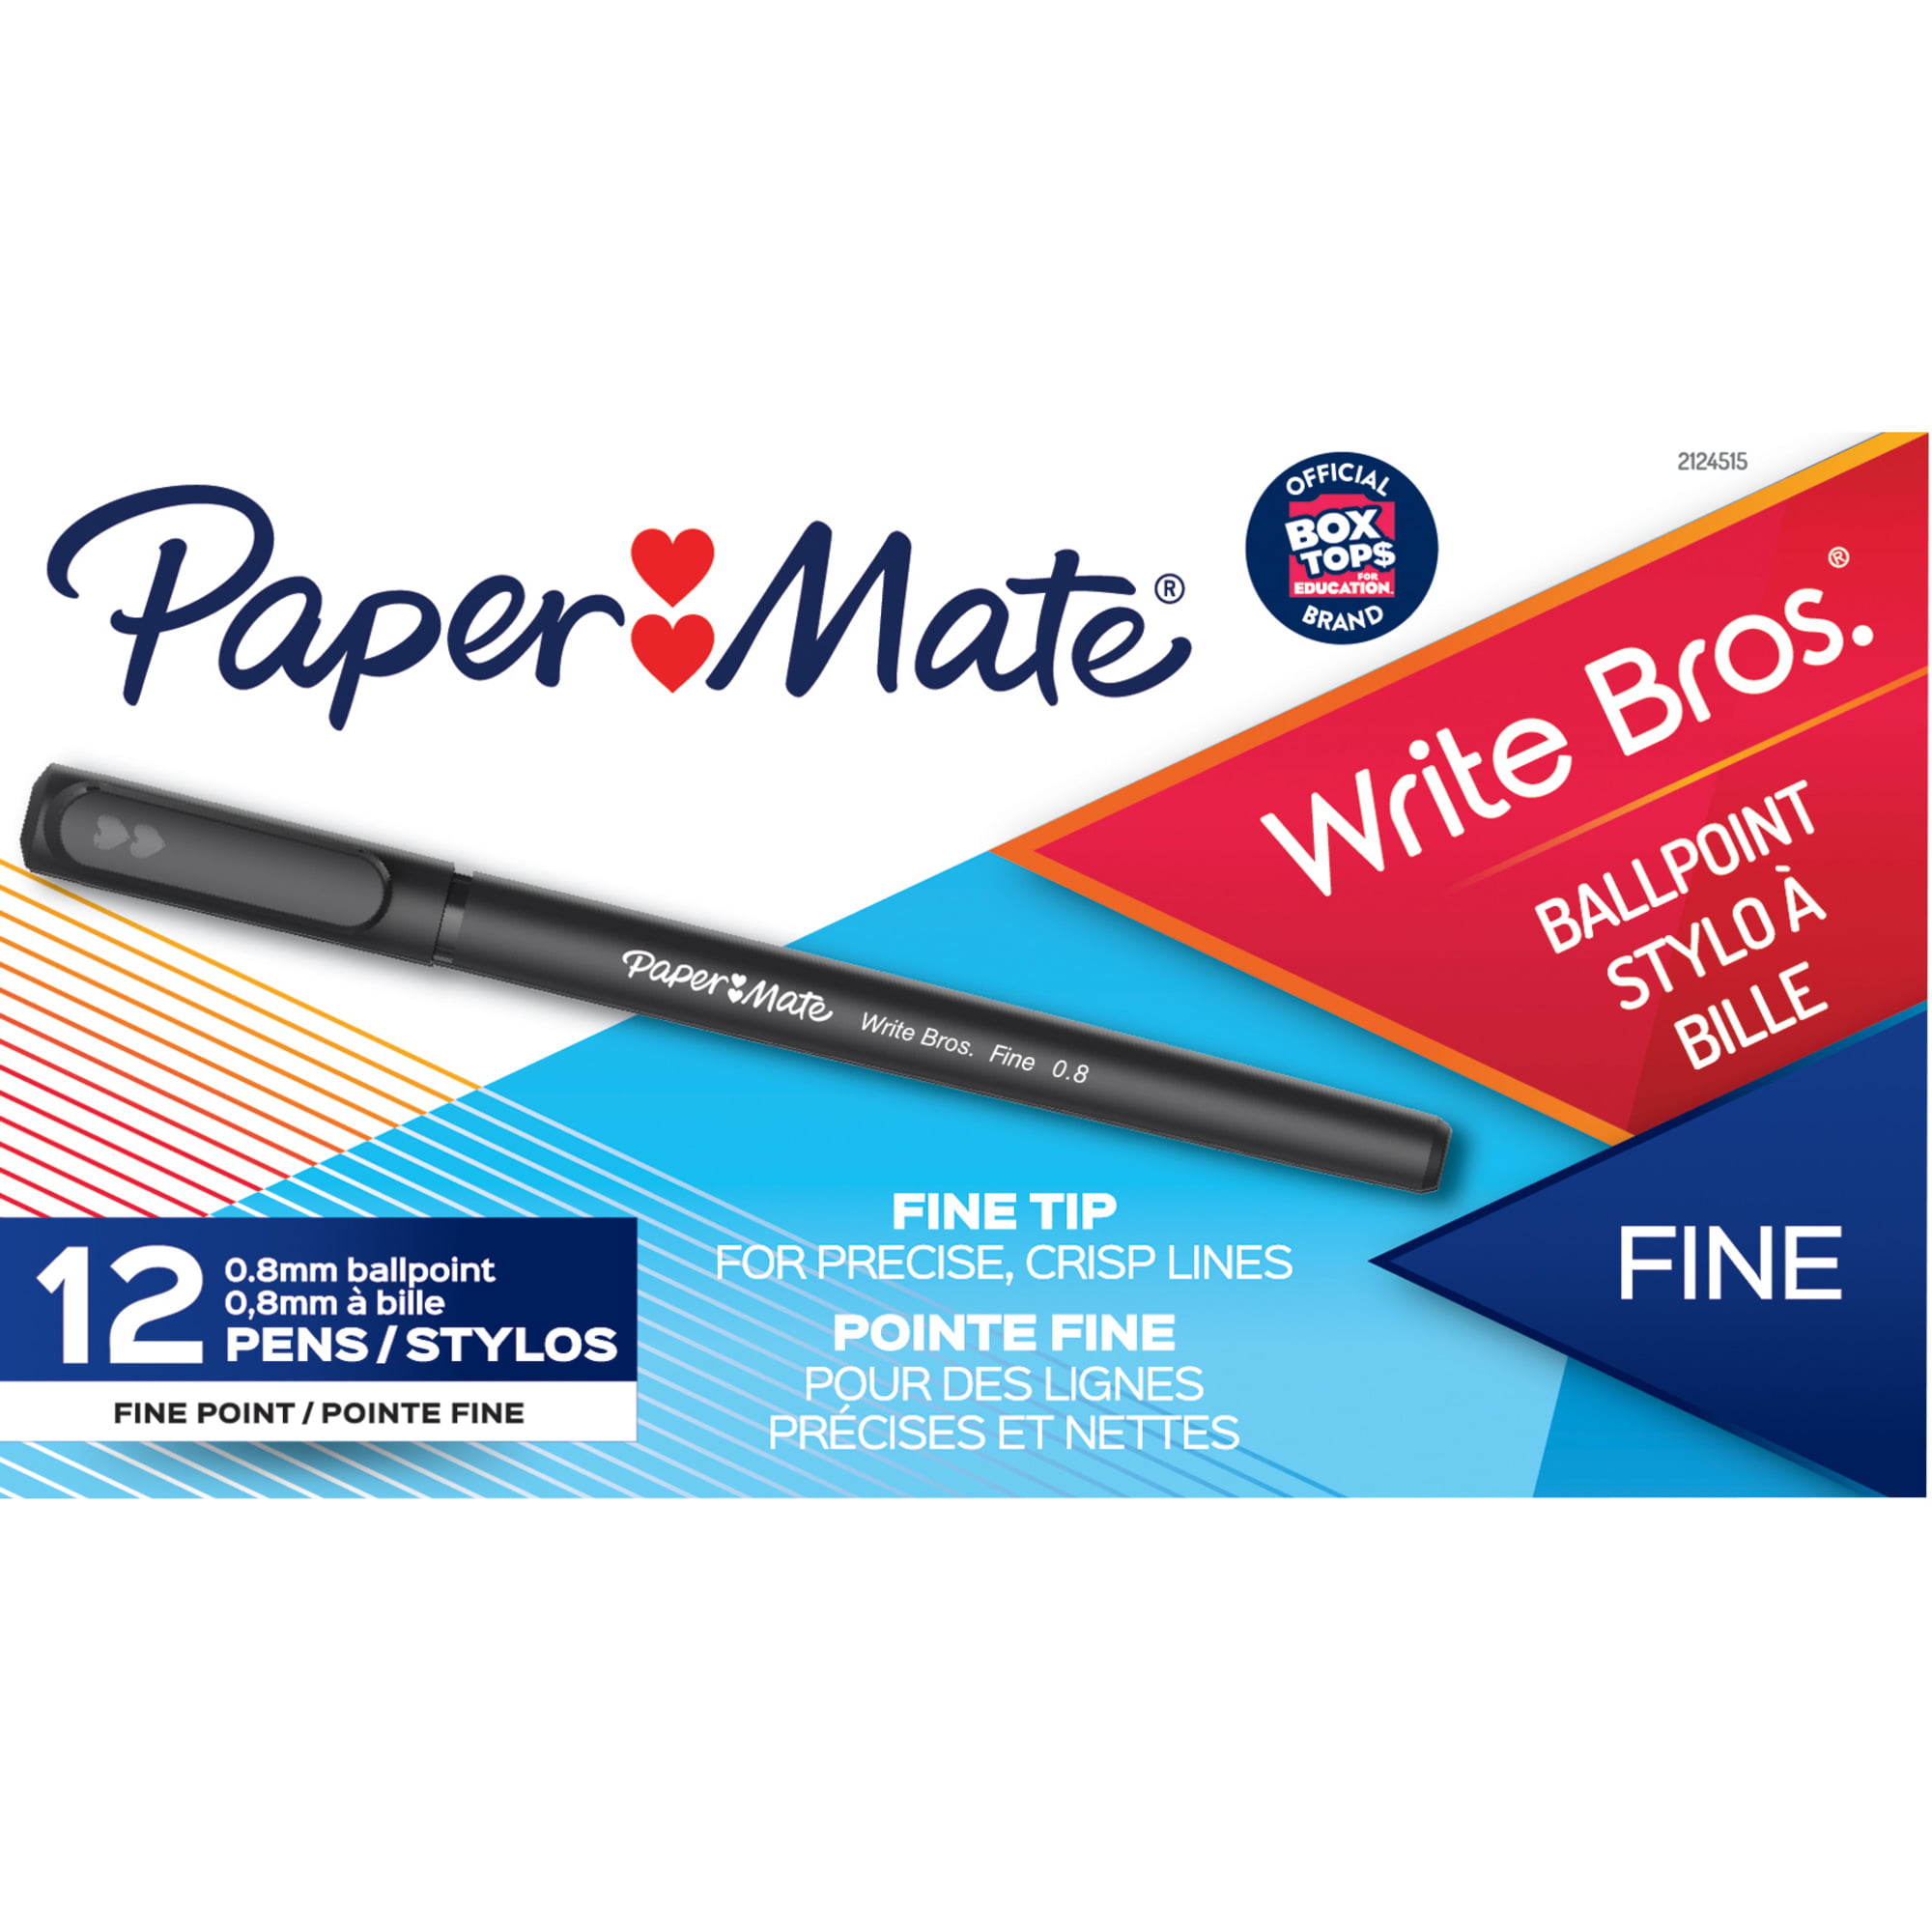 Paper Mate Write Bros Ballpoint Pens Medium Point Black 1.0mm 